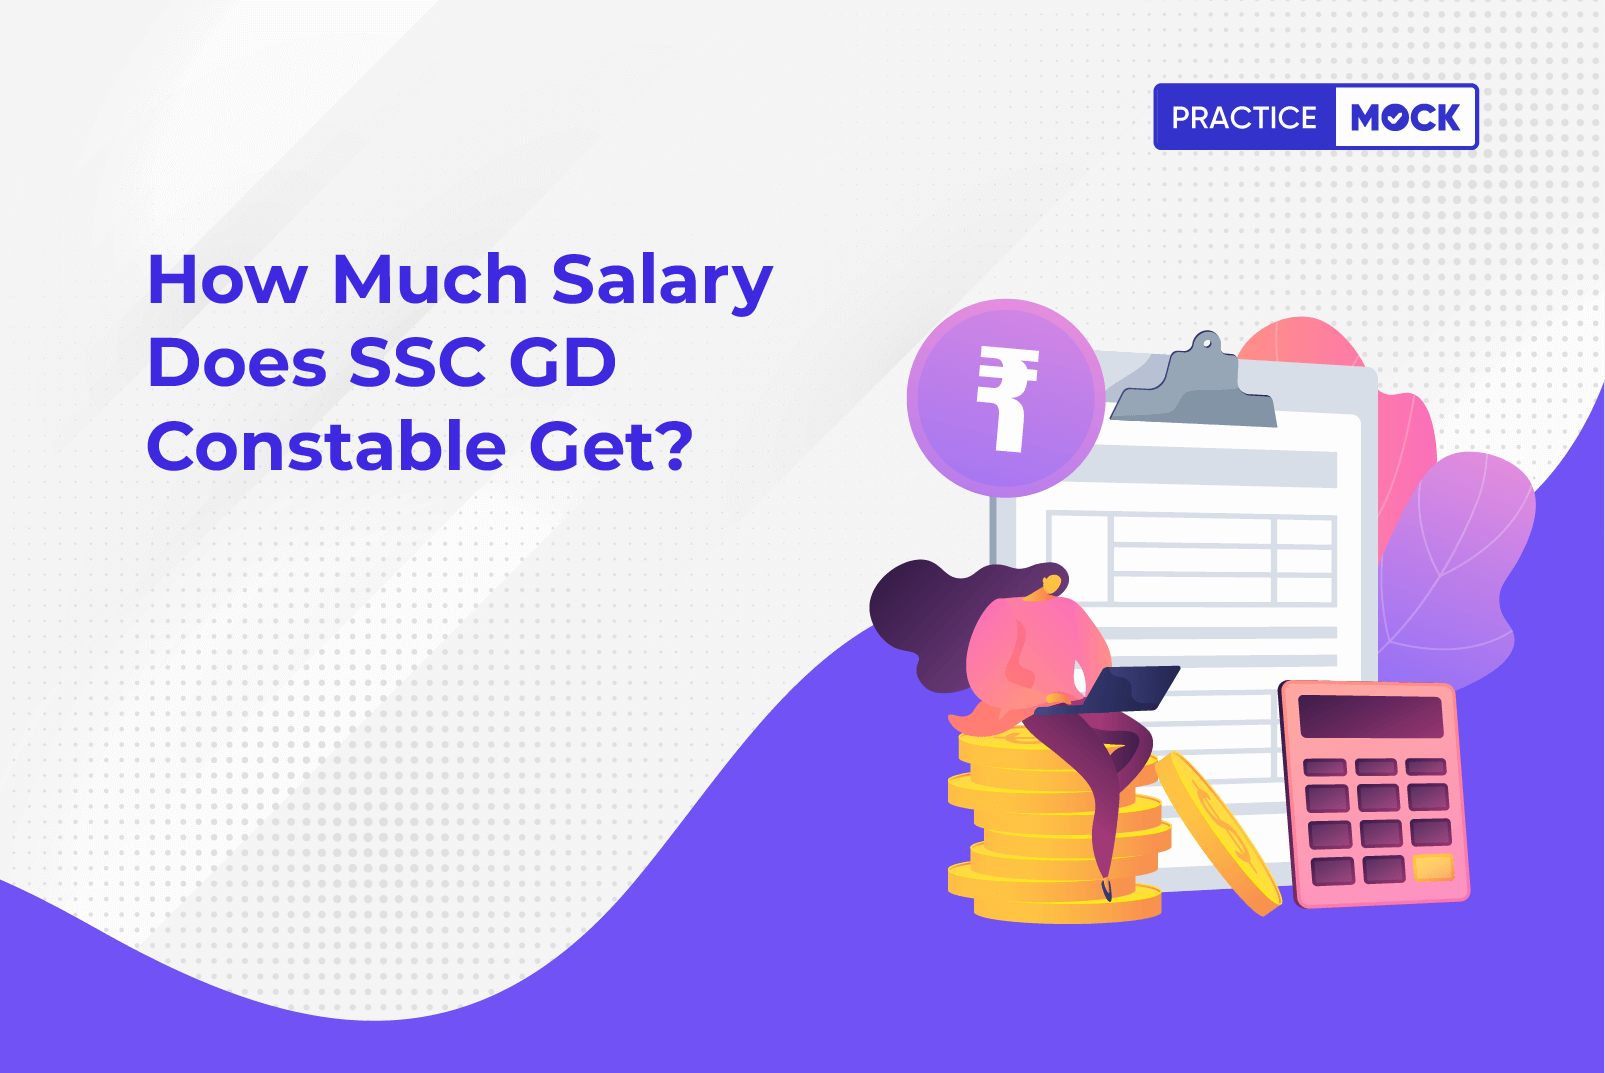 SSC GD Constable को कितनी Salary मिलती है?